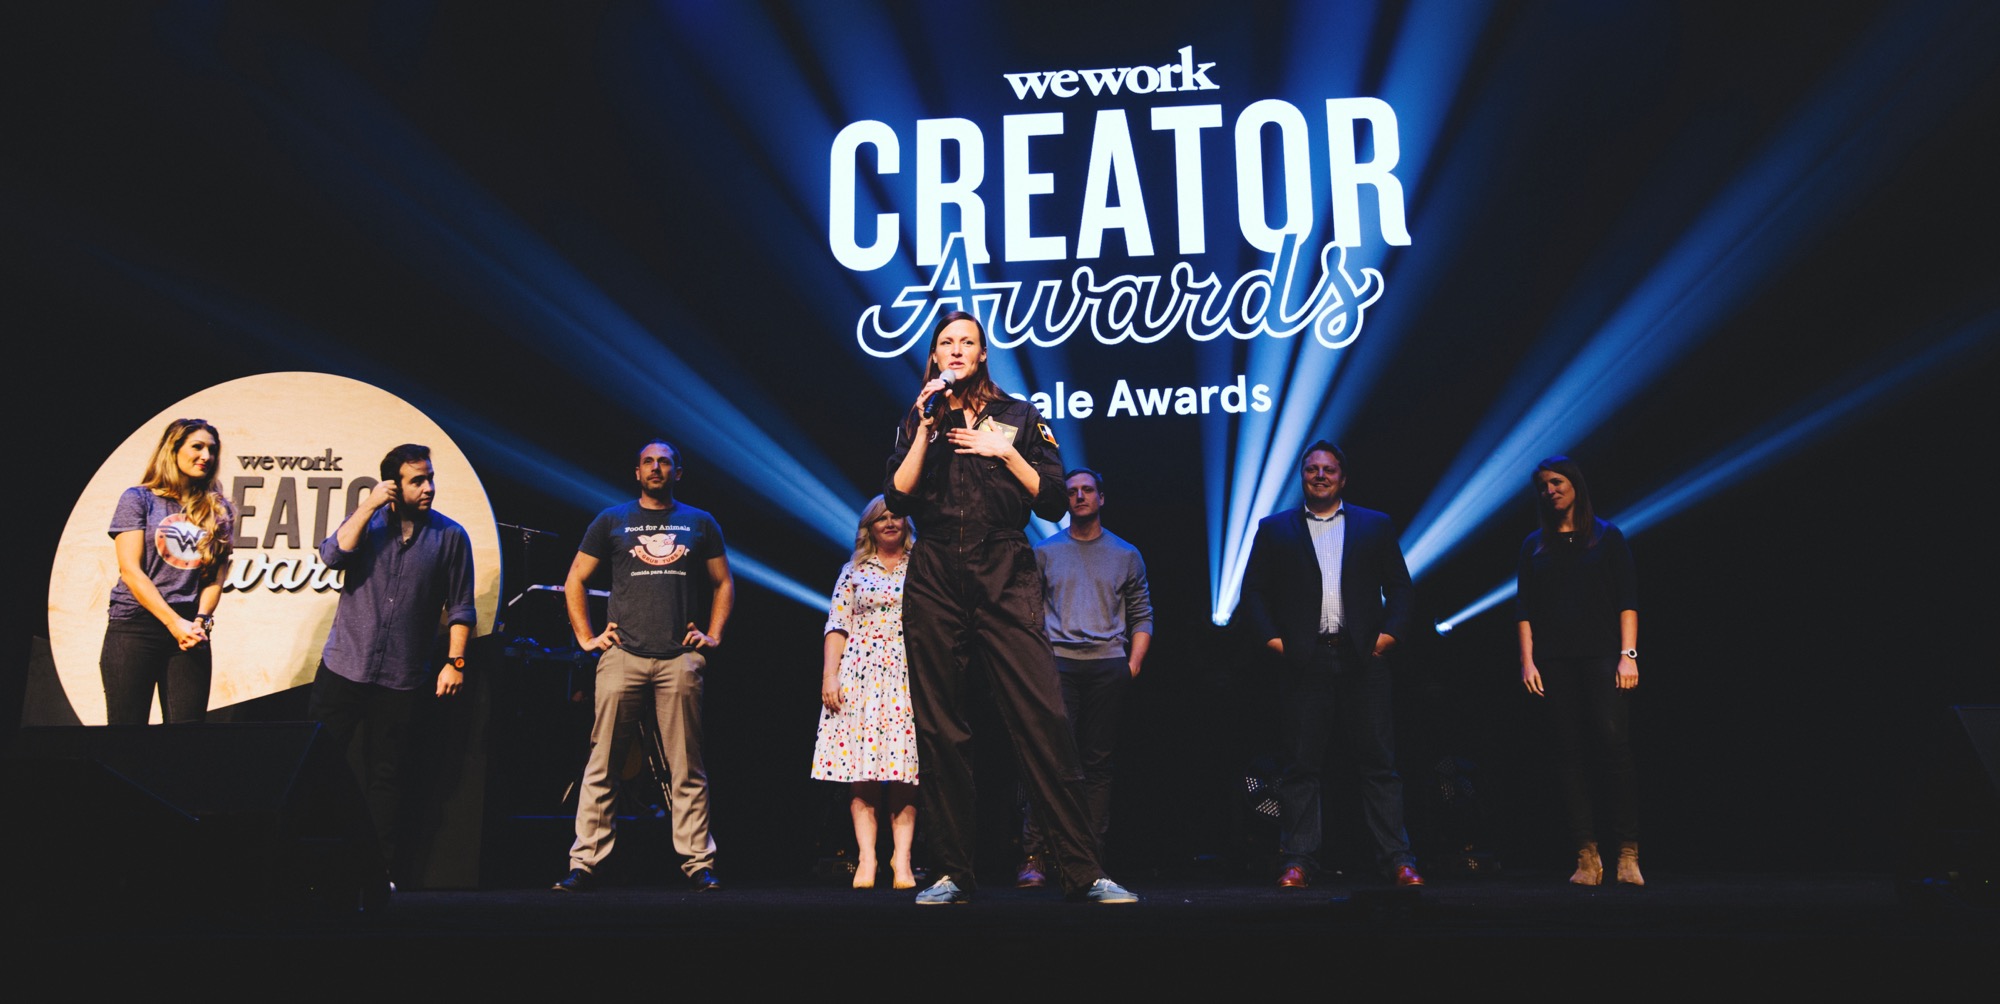 WeWork Creator Awards winner re-3d